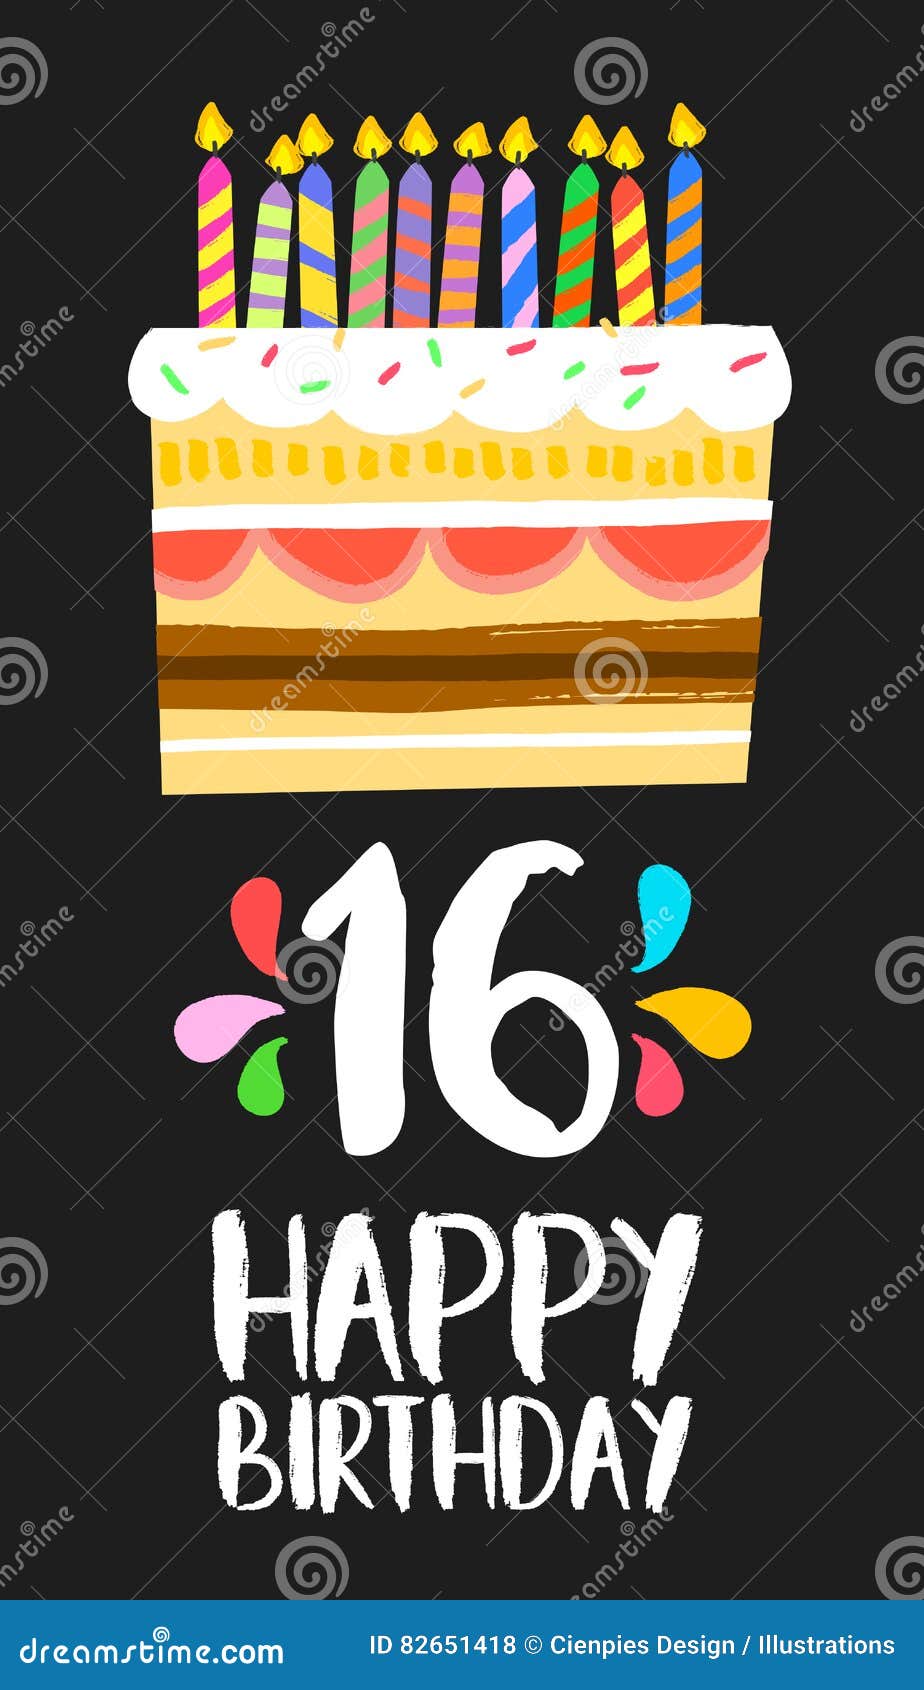 Greeting card Happy Birthday 16